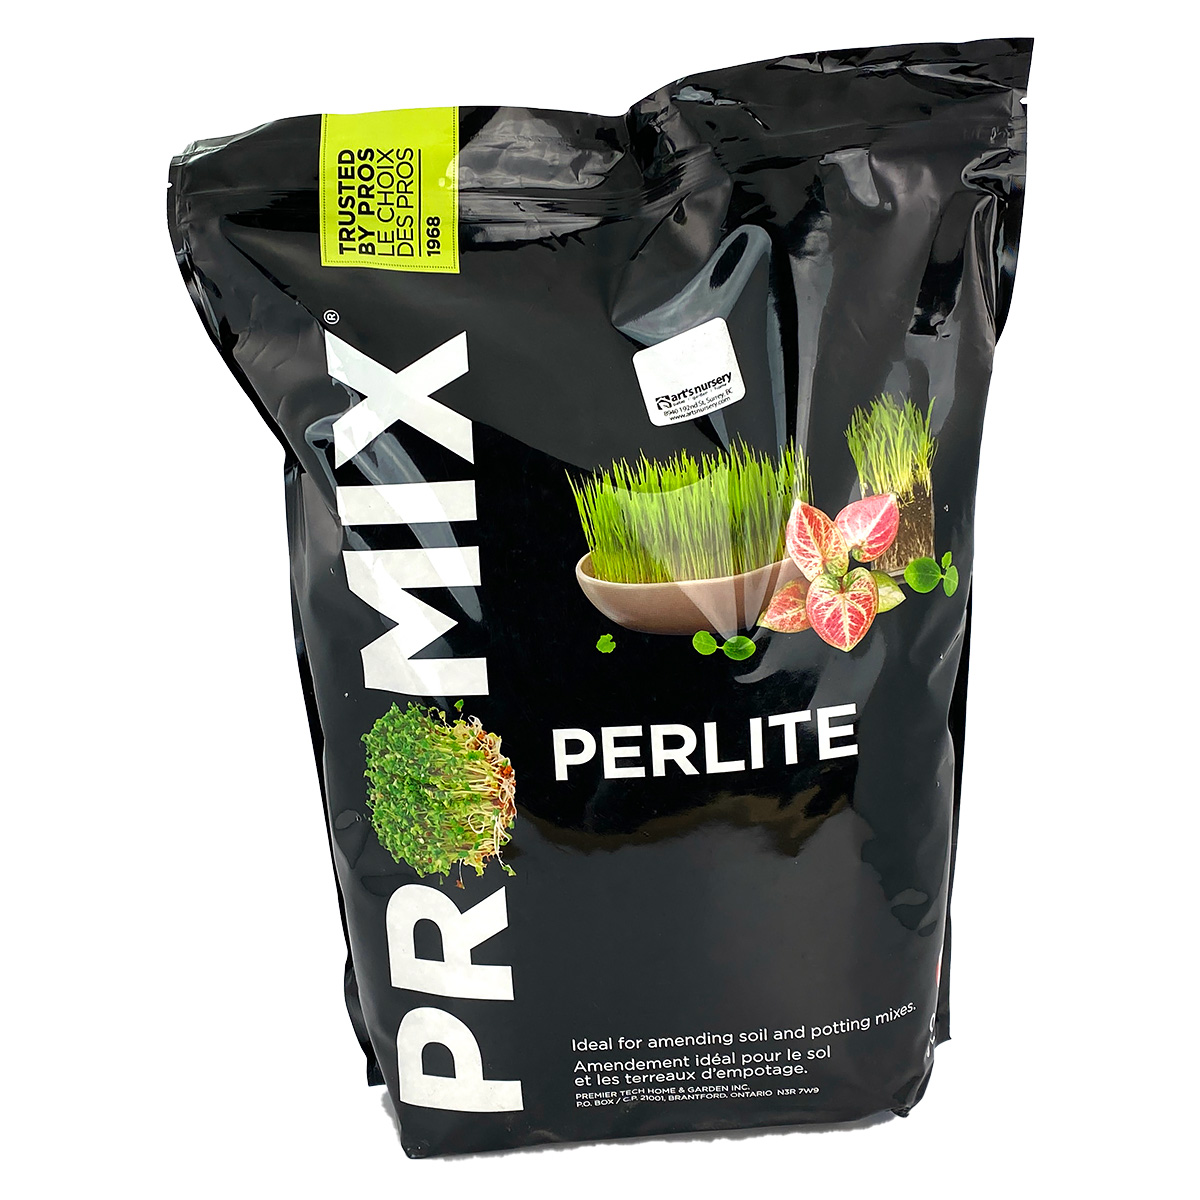 Pro-Mix Perlite 9L